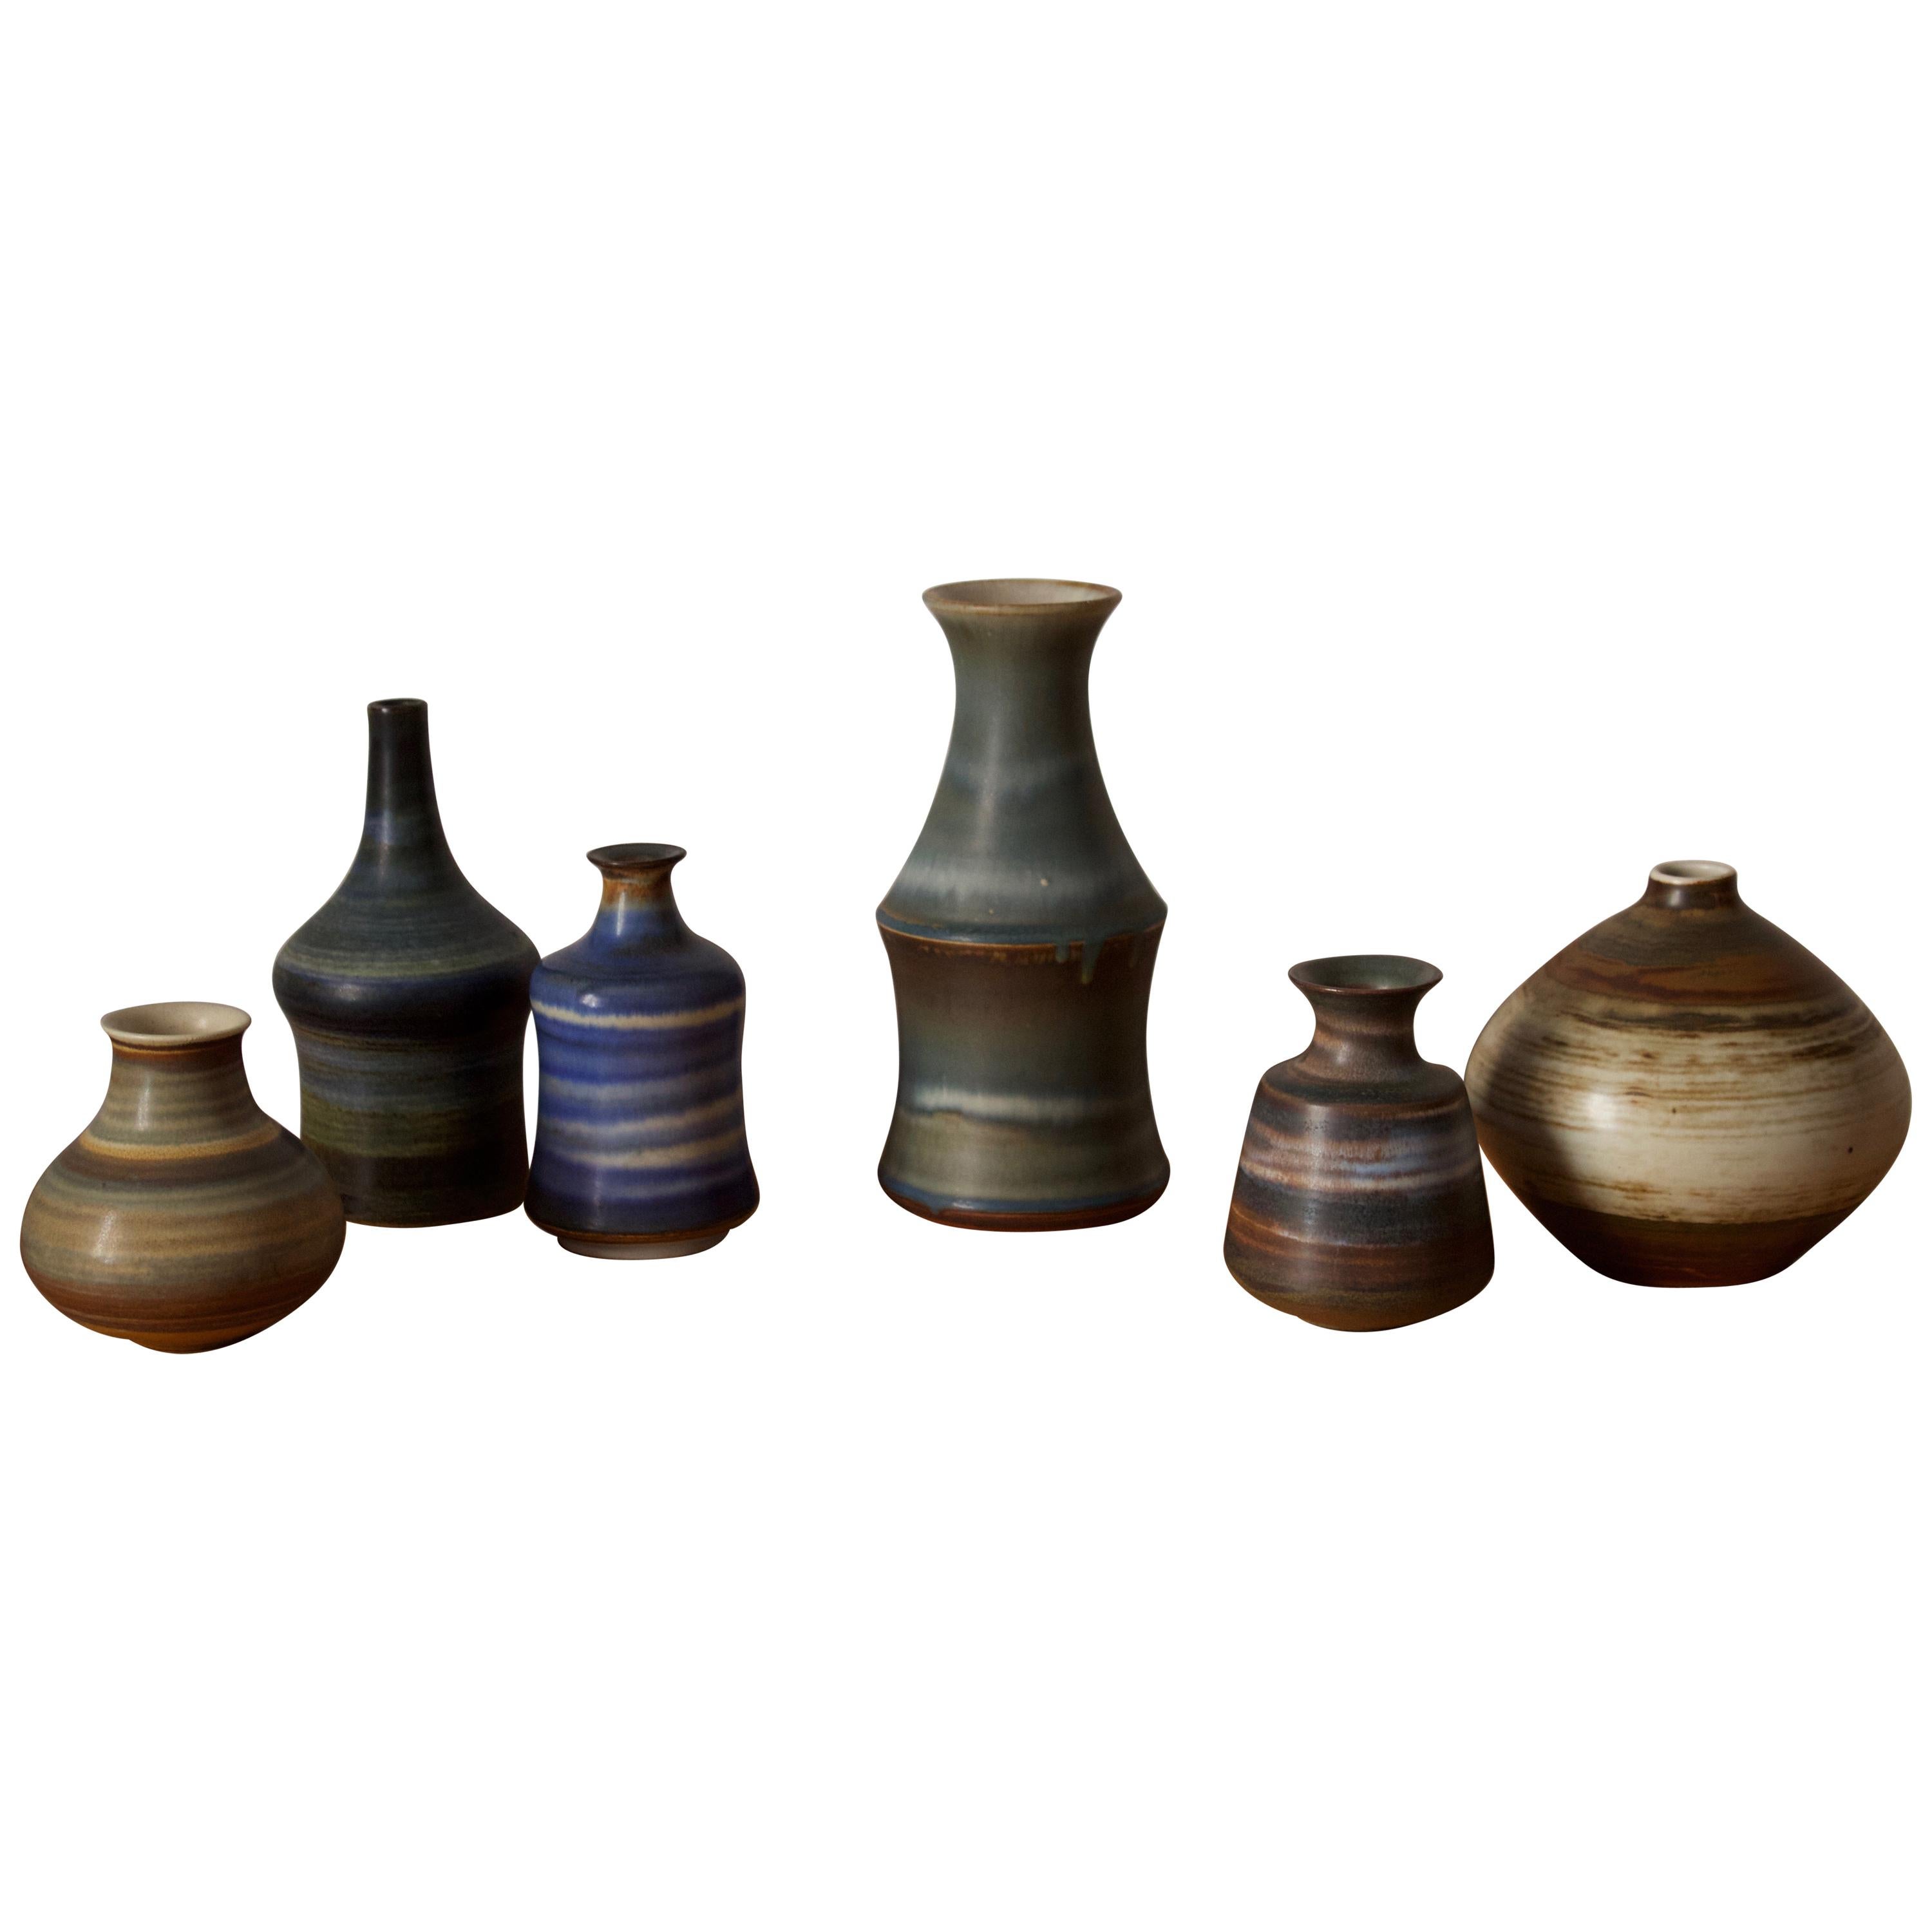 John Andersson, Vases, Glazed Stoneware, Höganäs, Sweden, 1950s